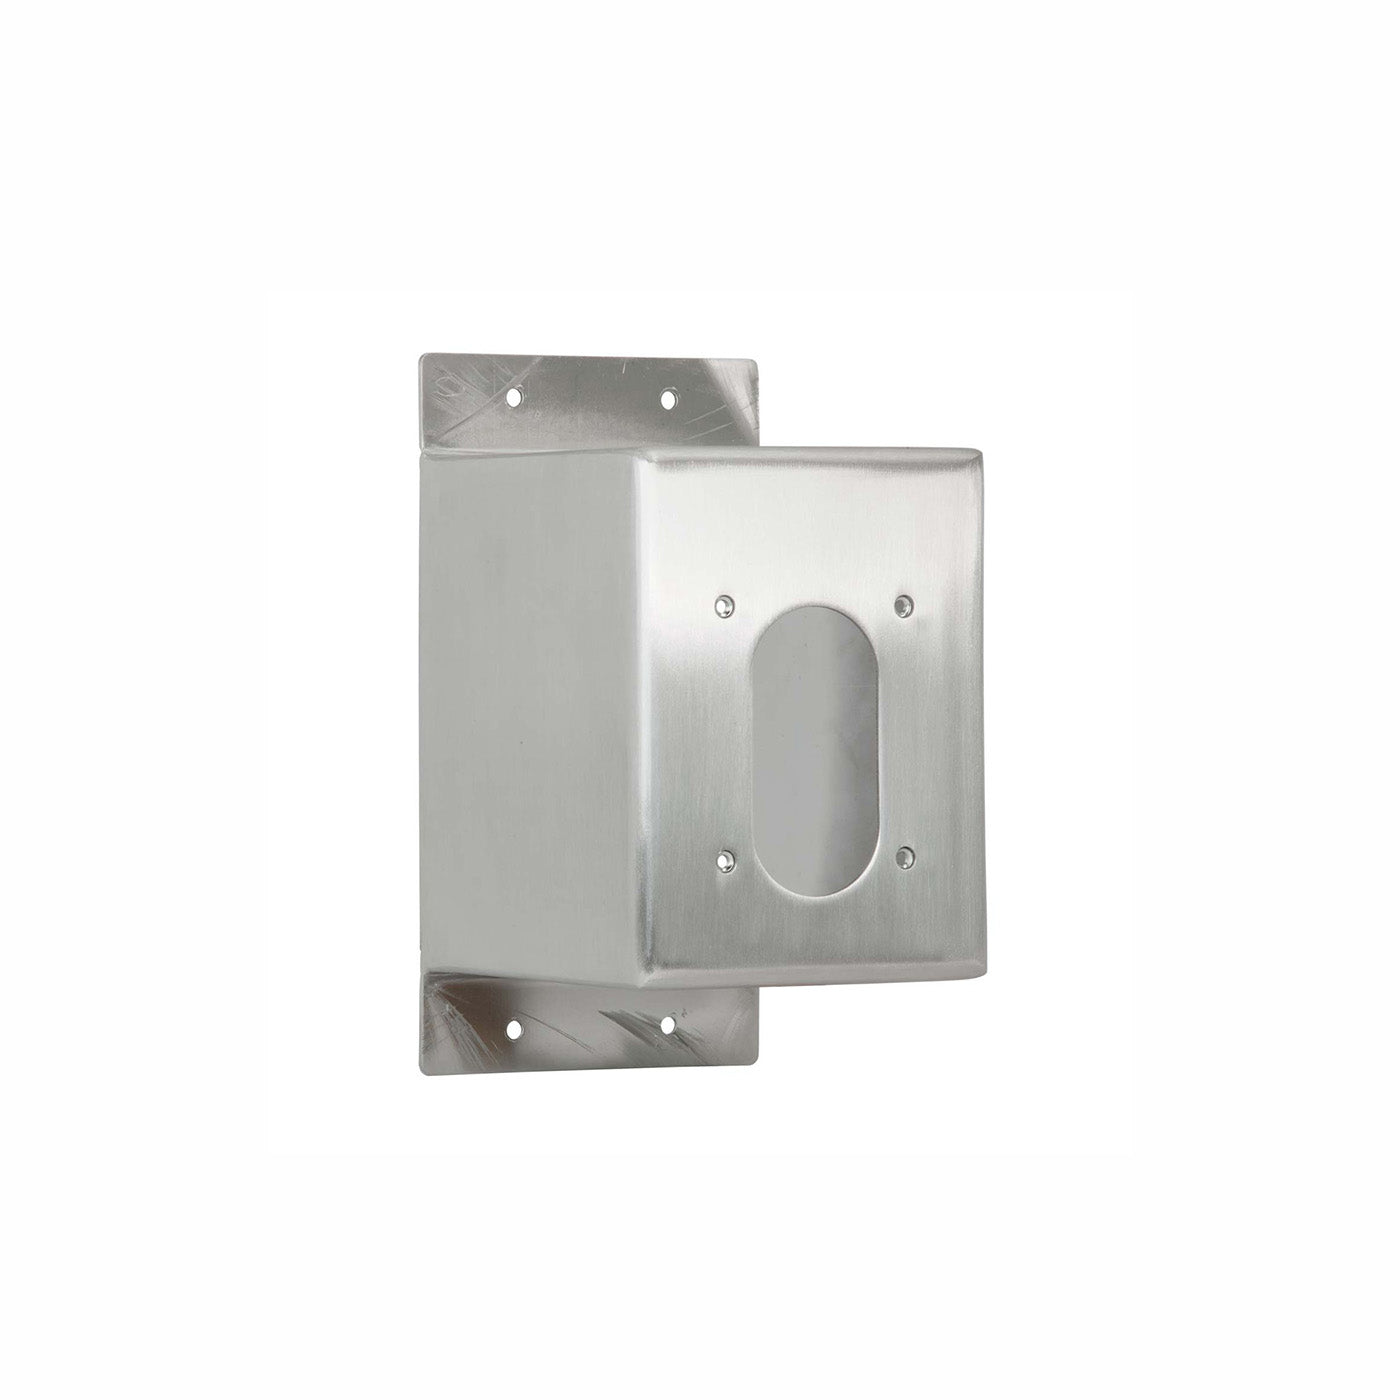 Aquor Stainless Steel Mounting Box V2+ 5.5" for House Hydrant V2+